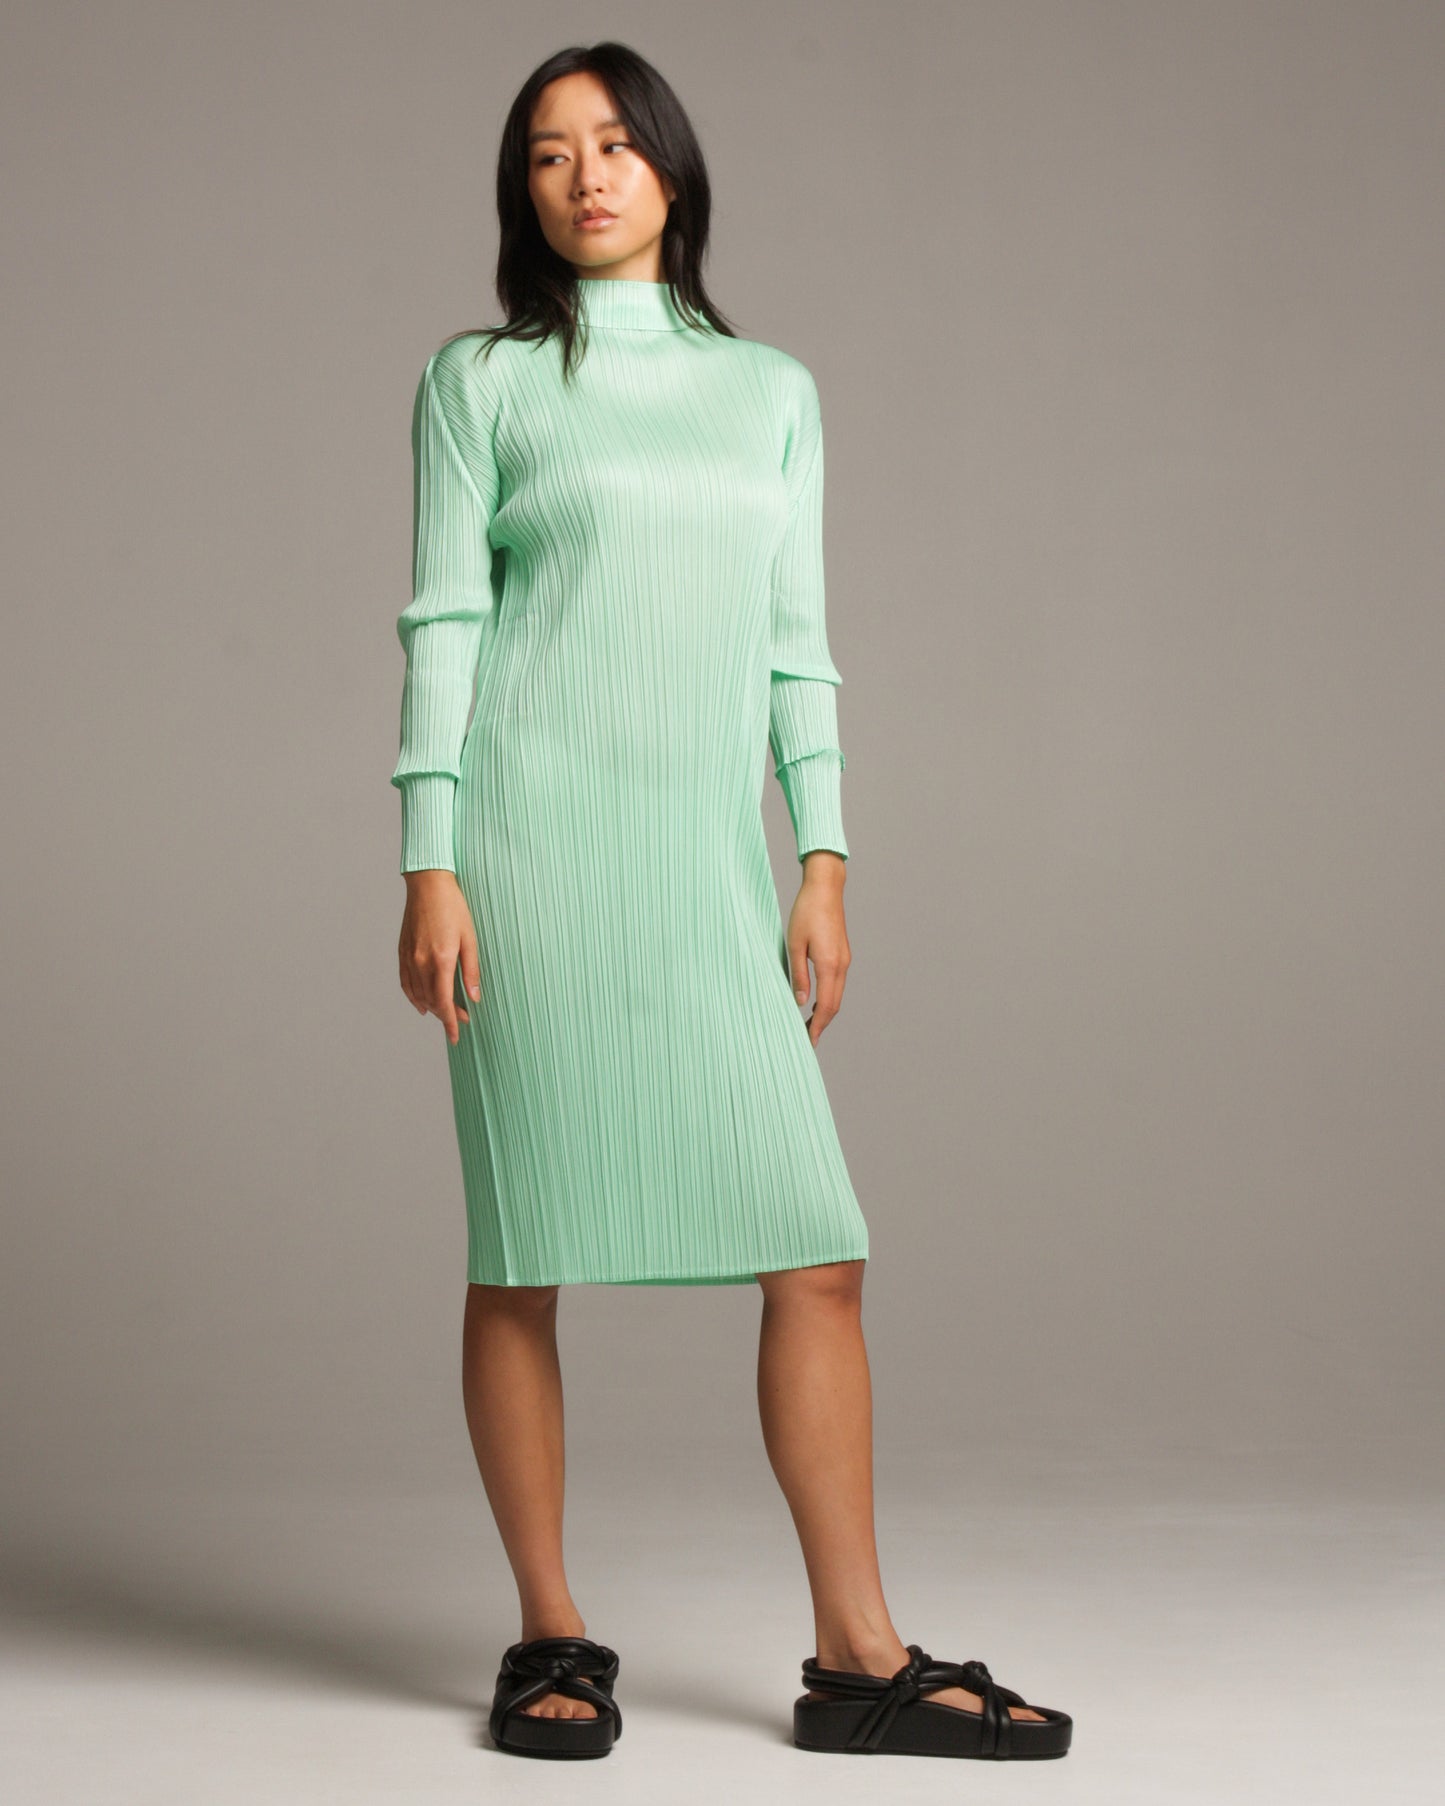 Classic Mint Green Long Sleeve Dress